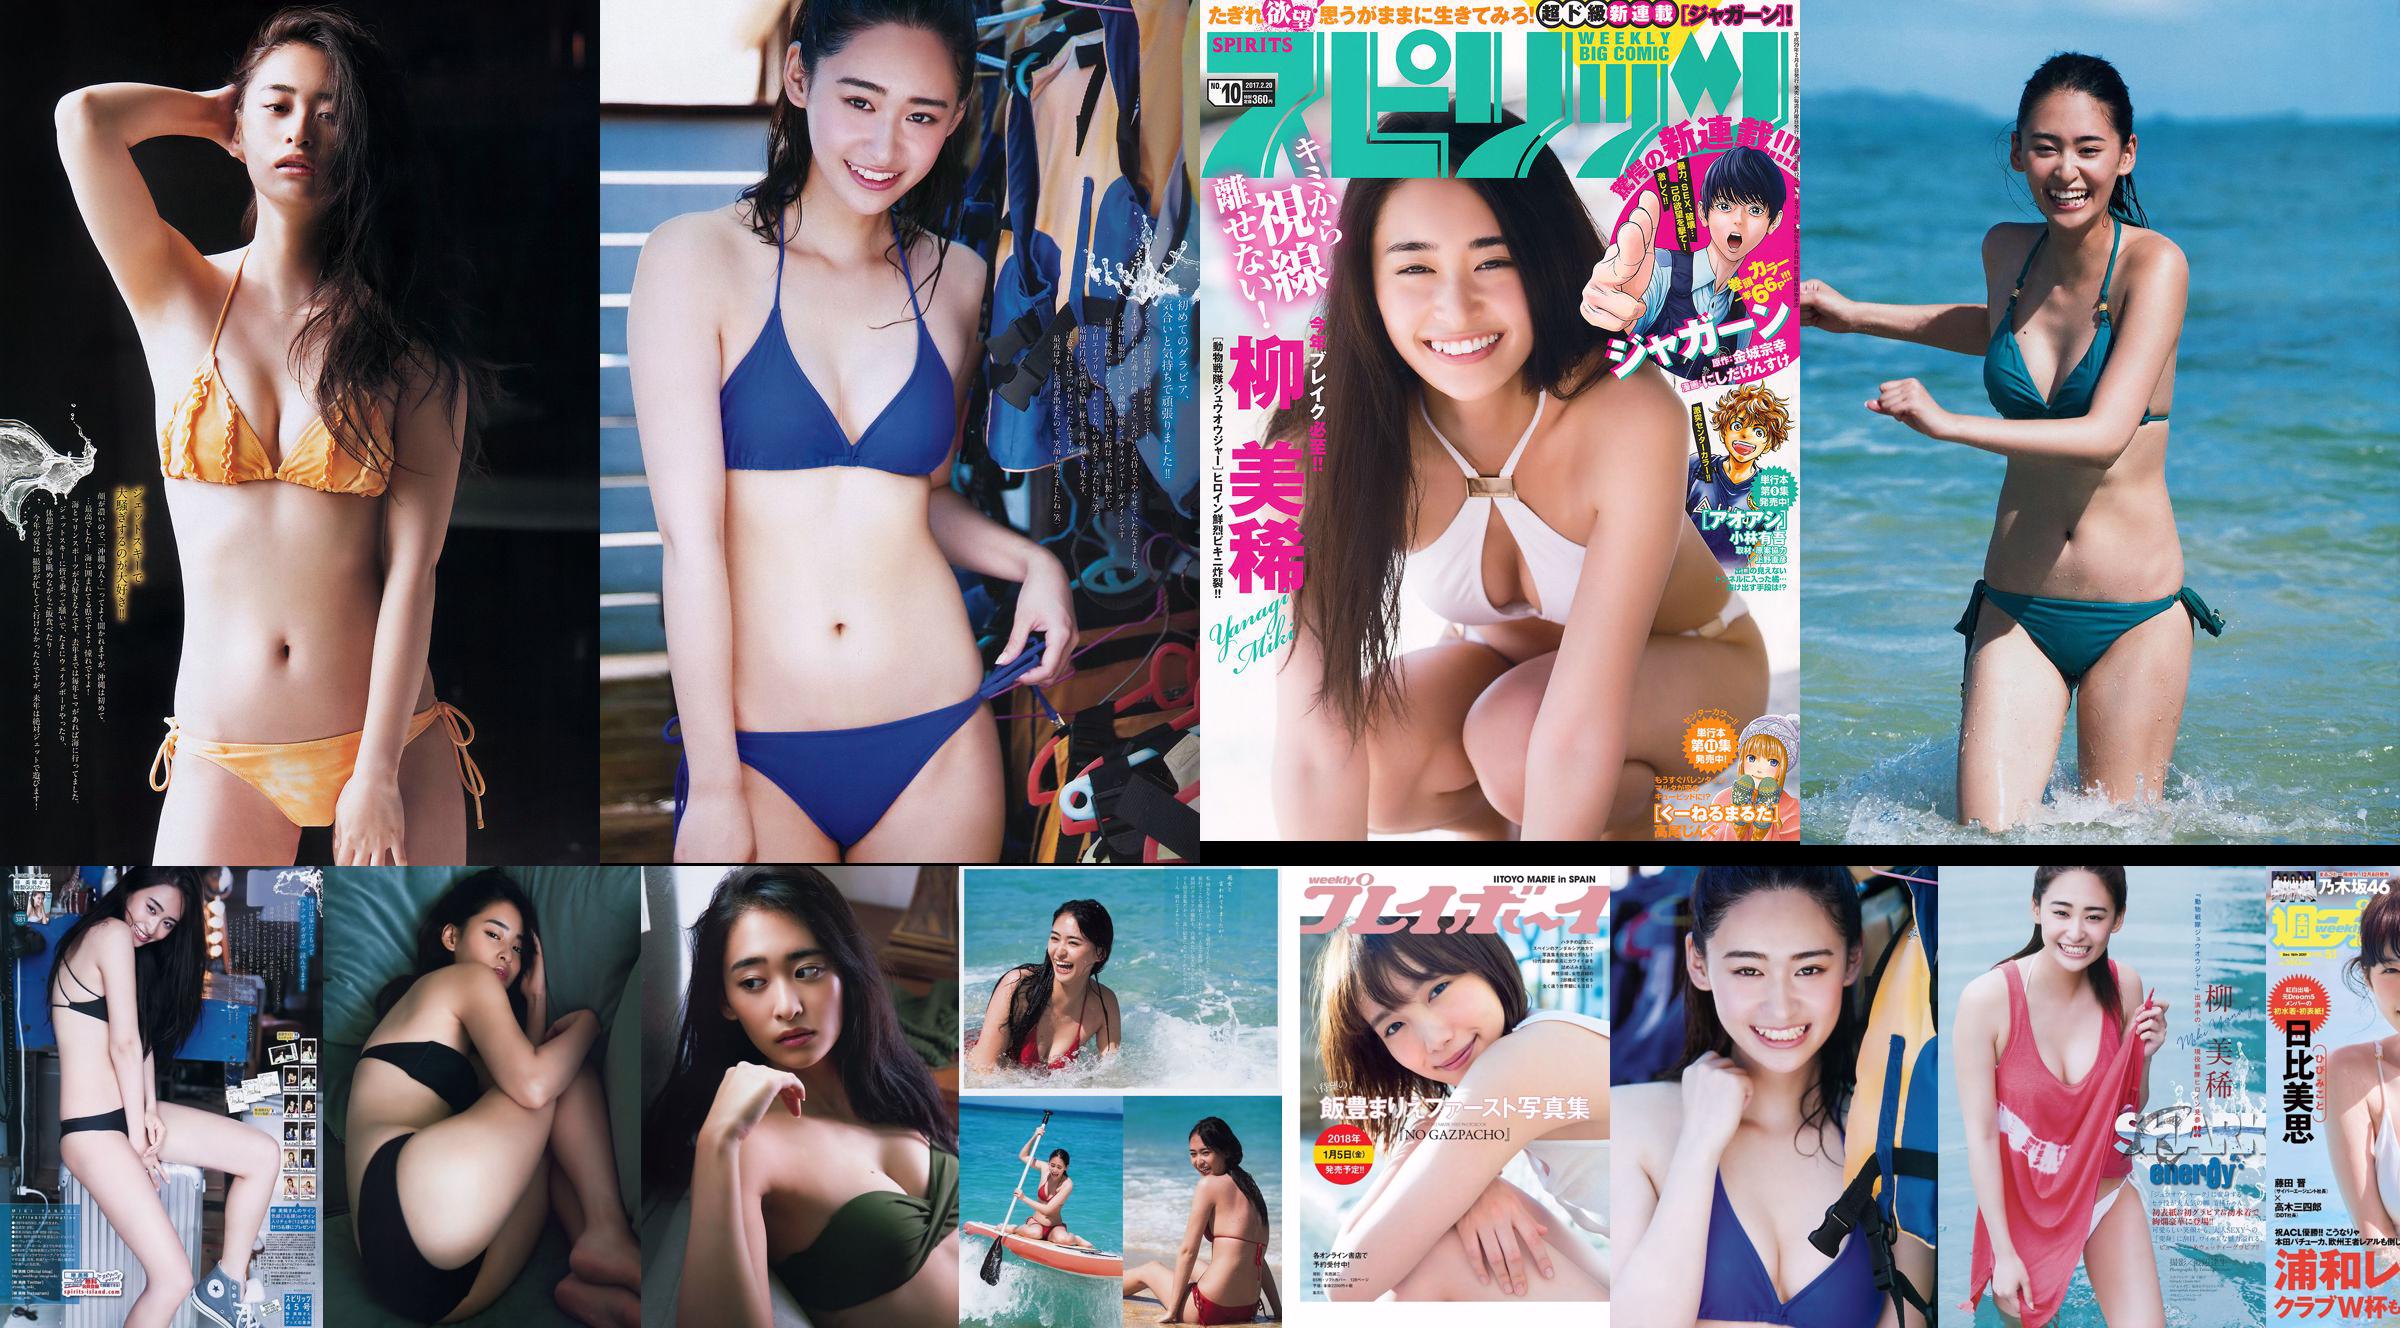 Miki Yanagi Sara Oshino Cecil Kishimoto Mikoto Hibi [wekelijkse Playboy] foto 2017 nr 51 No.4b418b Pagina 1